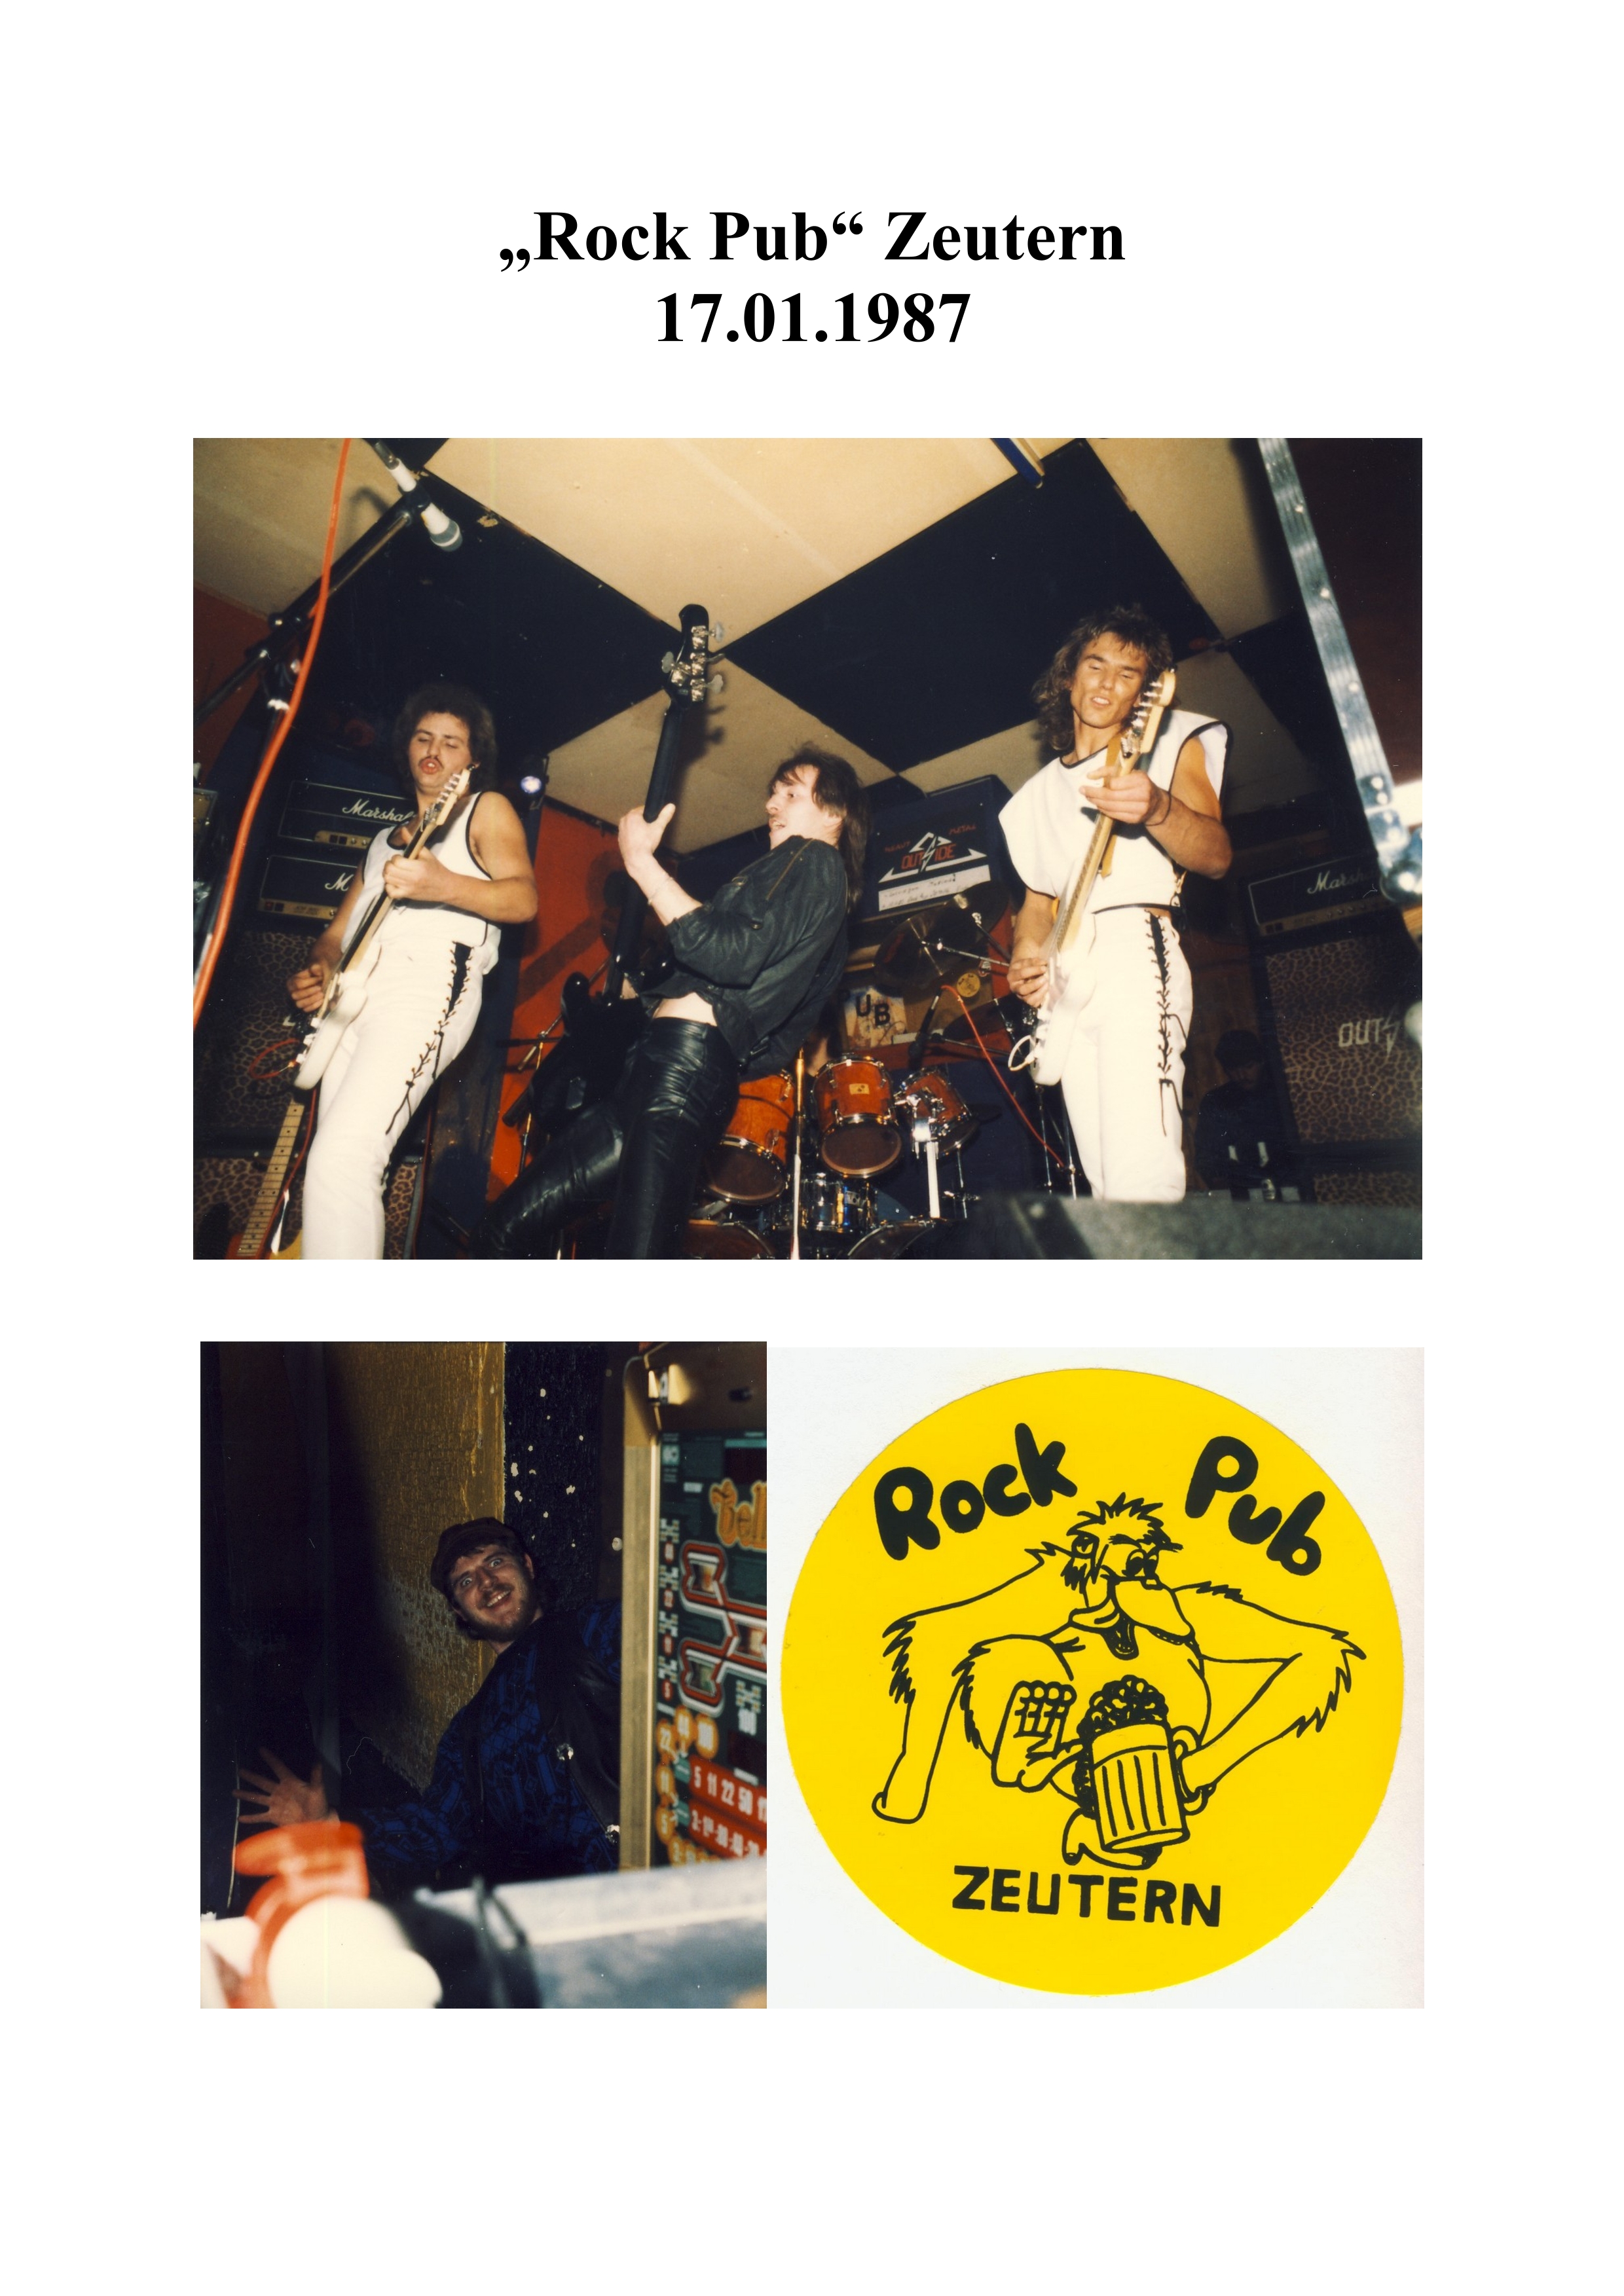 "Rock Pub" Zeutern (17.01.1987)